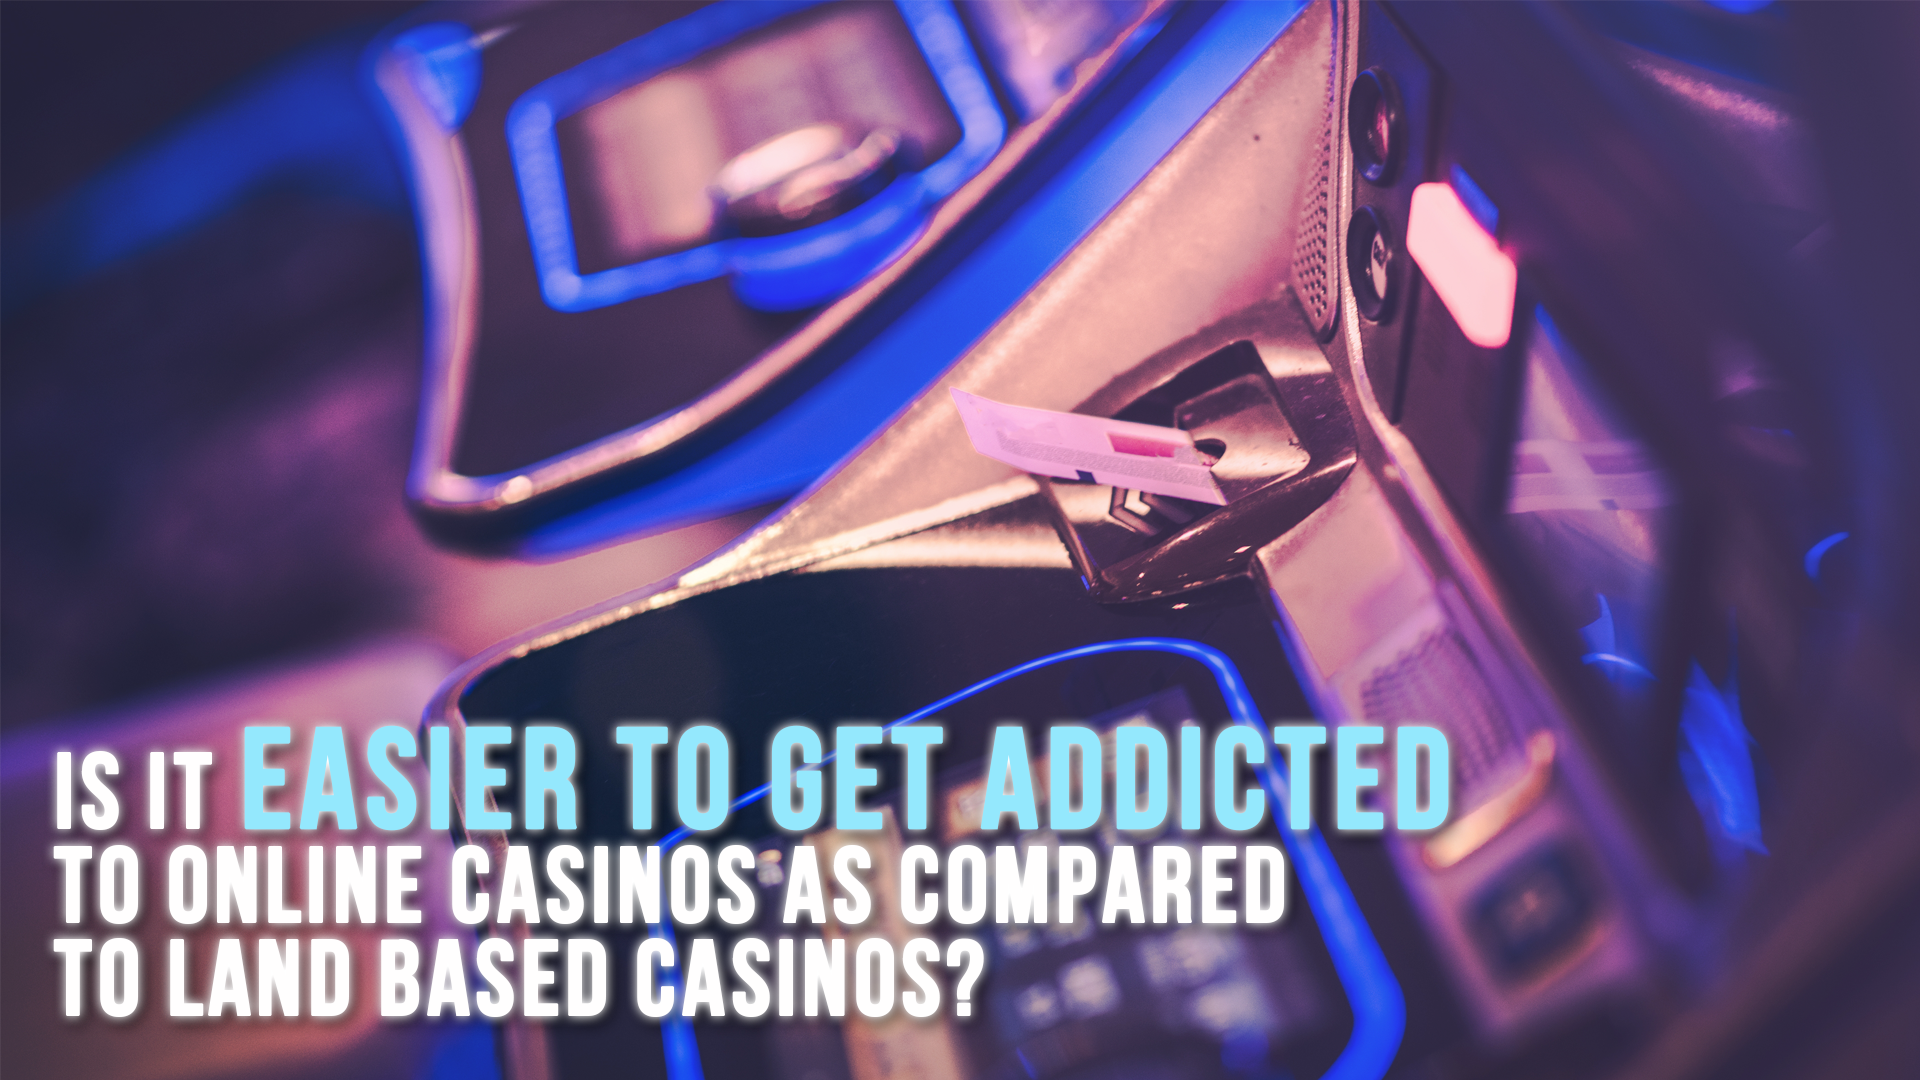 Are Online Casino More Addictive Than Land Casinos?